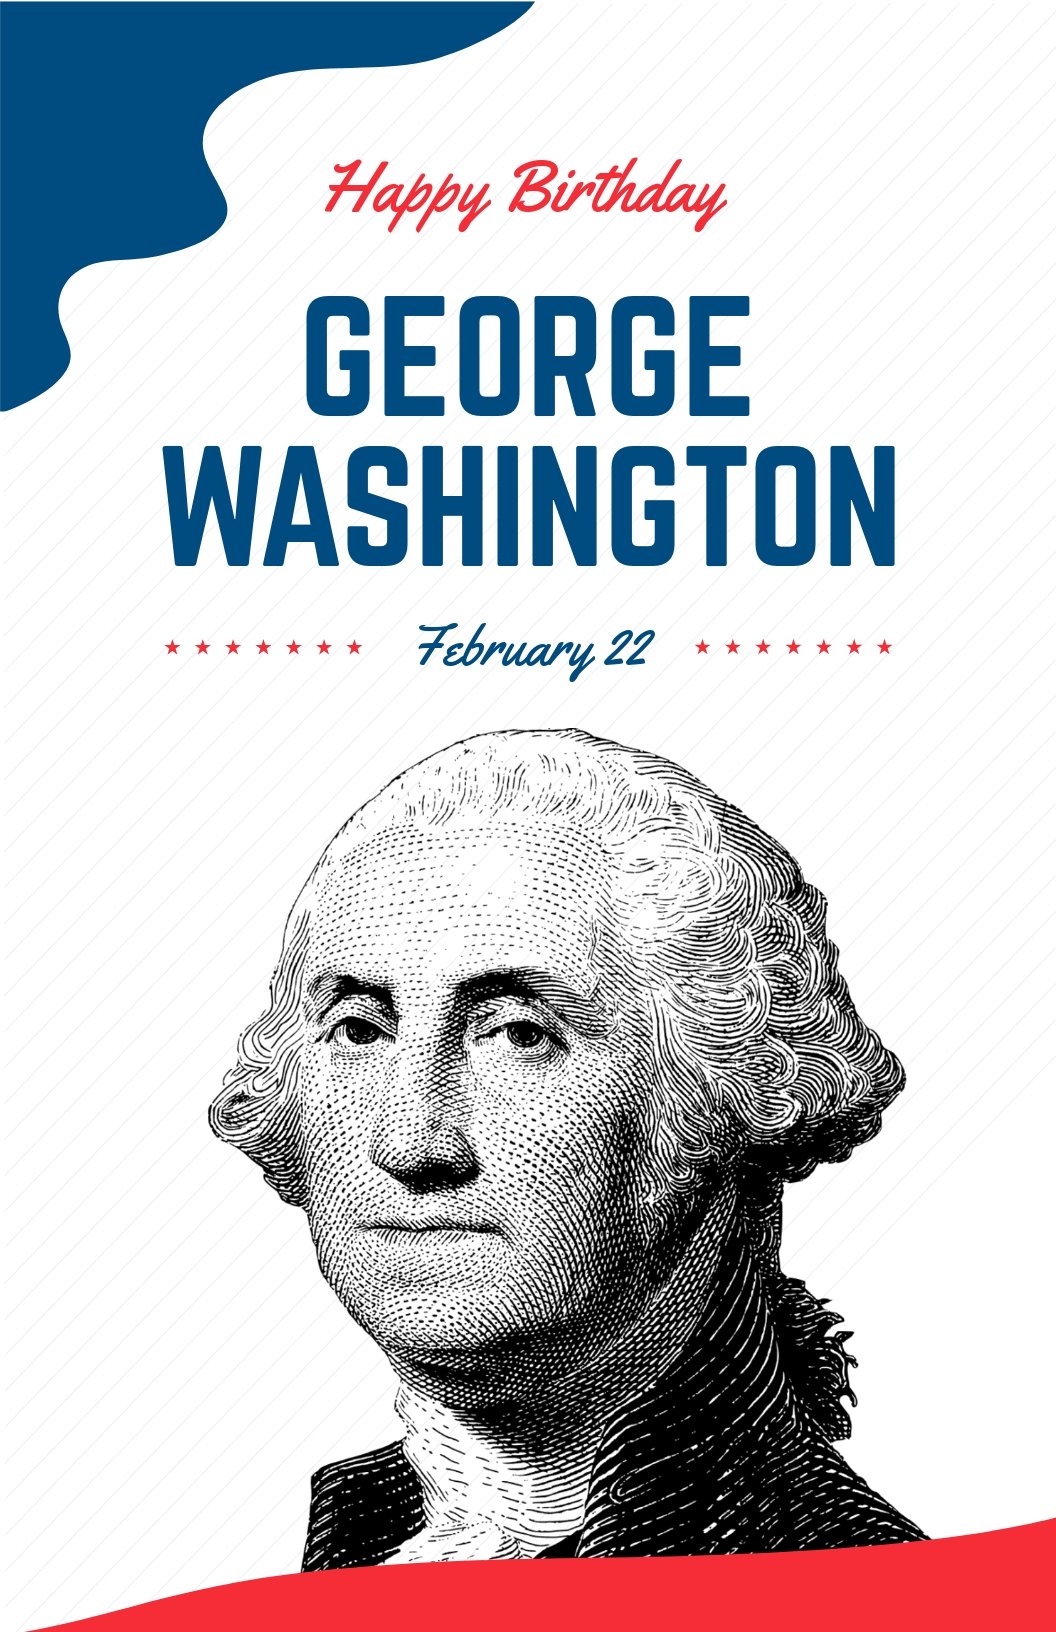 Free George Washington's Birthday Poster Template